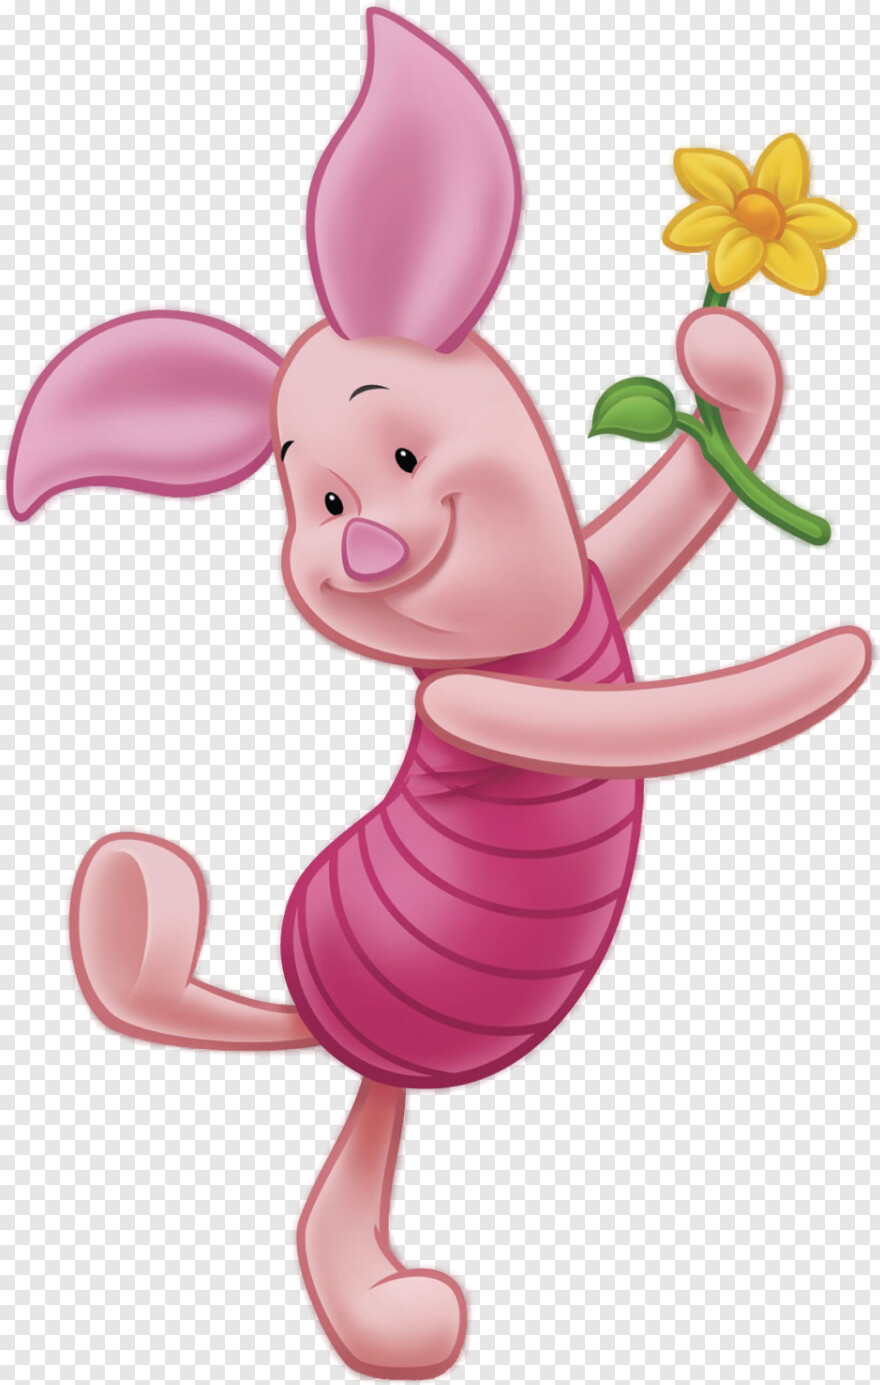 winnie-the-pooh # 395869